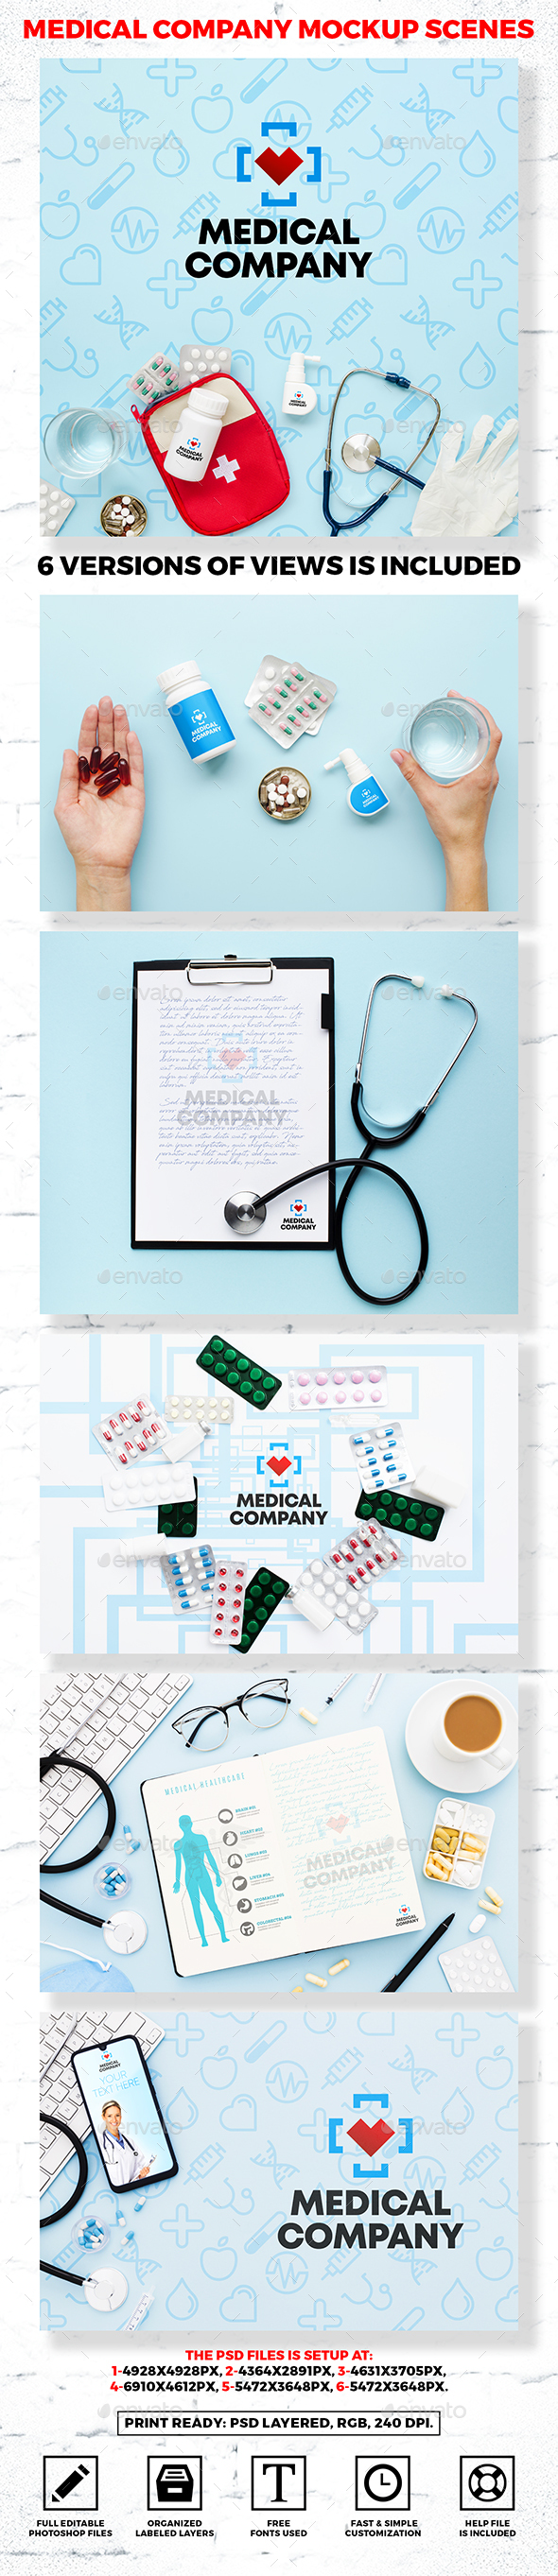 Download Branding Medical Company Mockup Scenes By 4ustudio Graphicriver